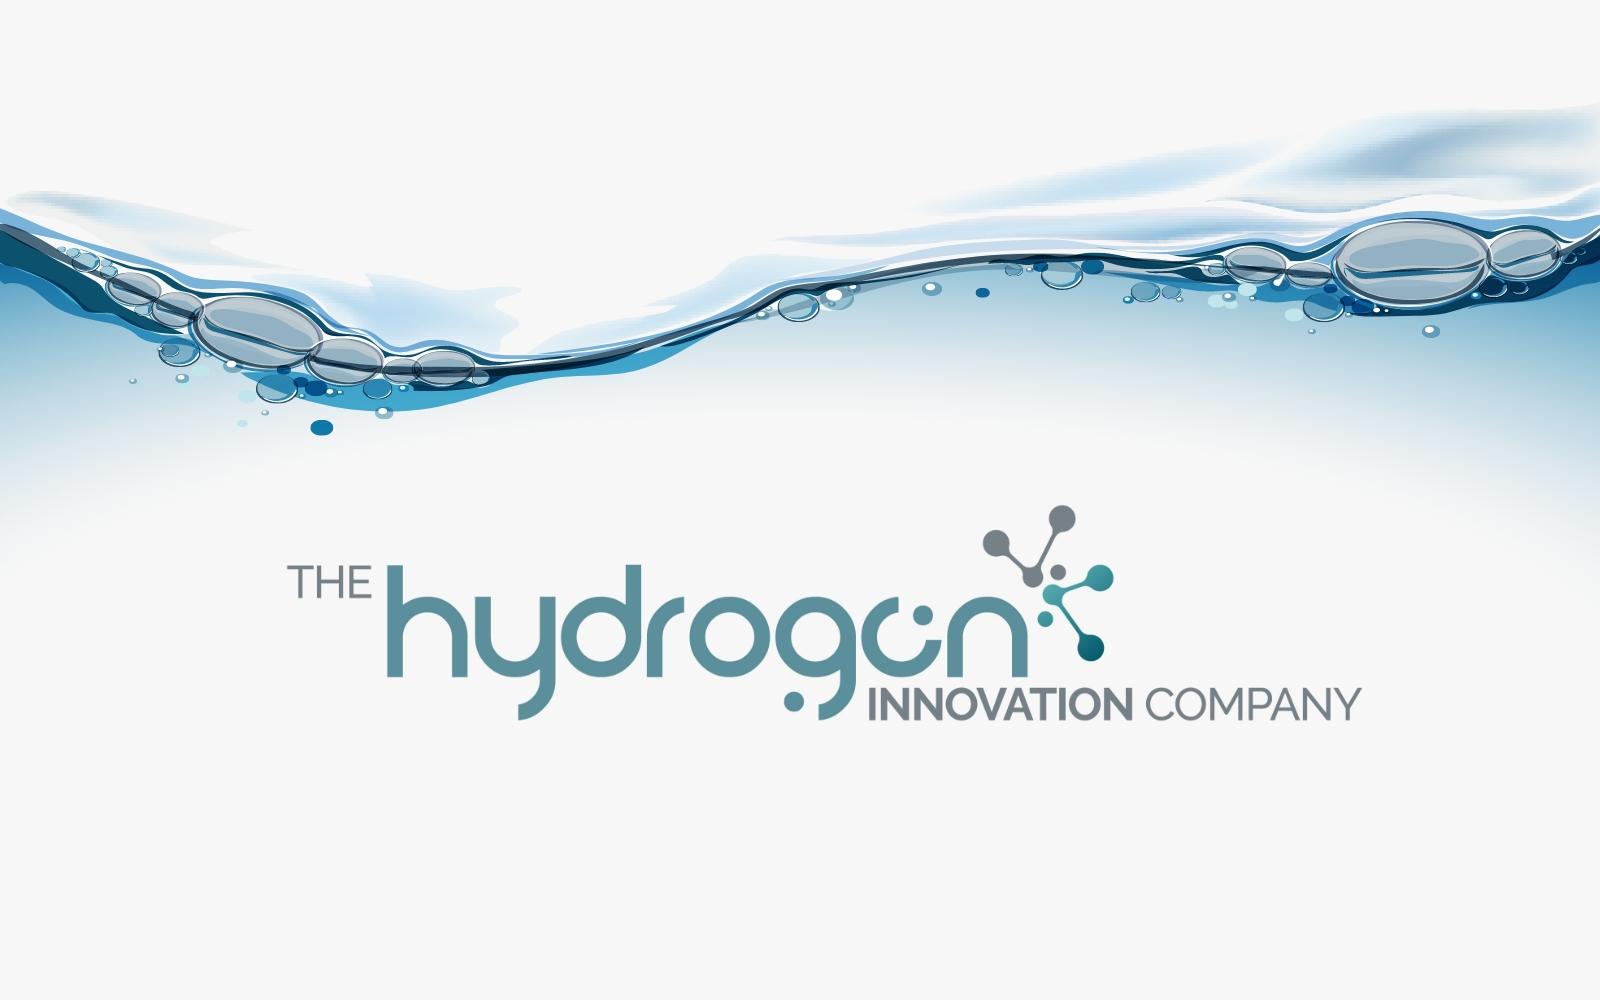 The Hydrogen Innovation Company Image